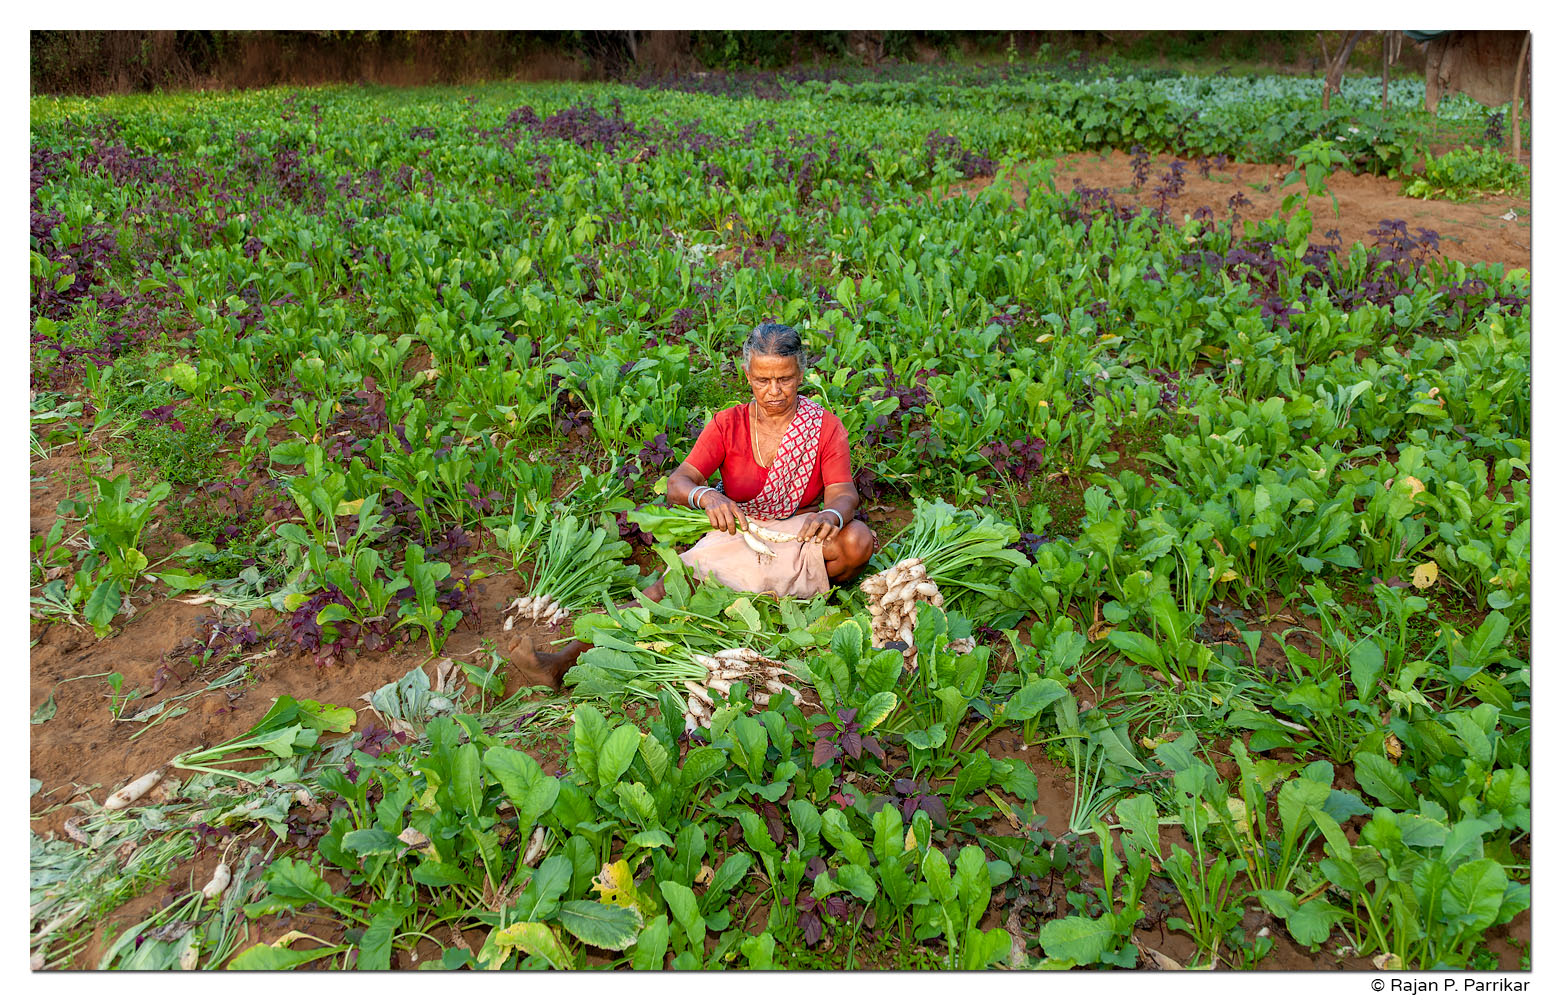 Sitabai Canconkar, farmer - Taleigao, Goa